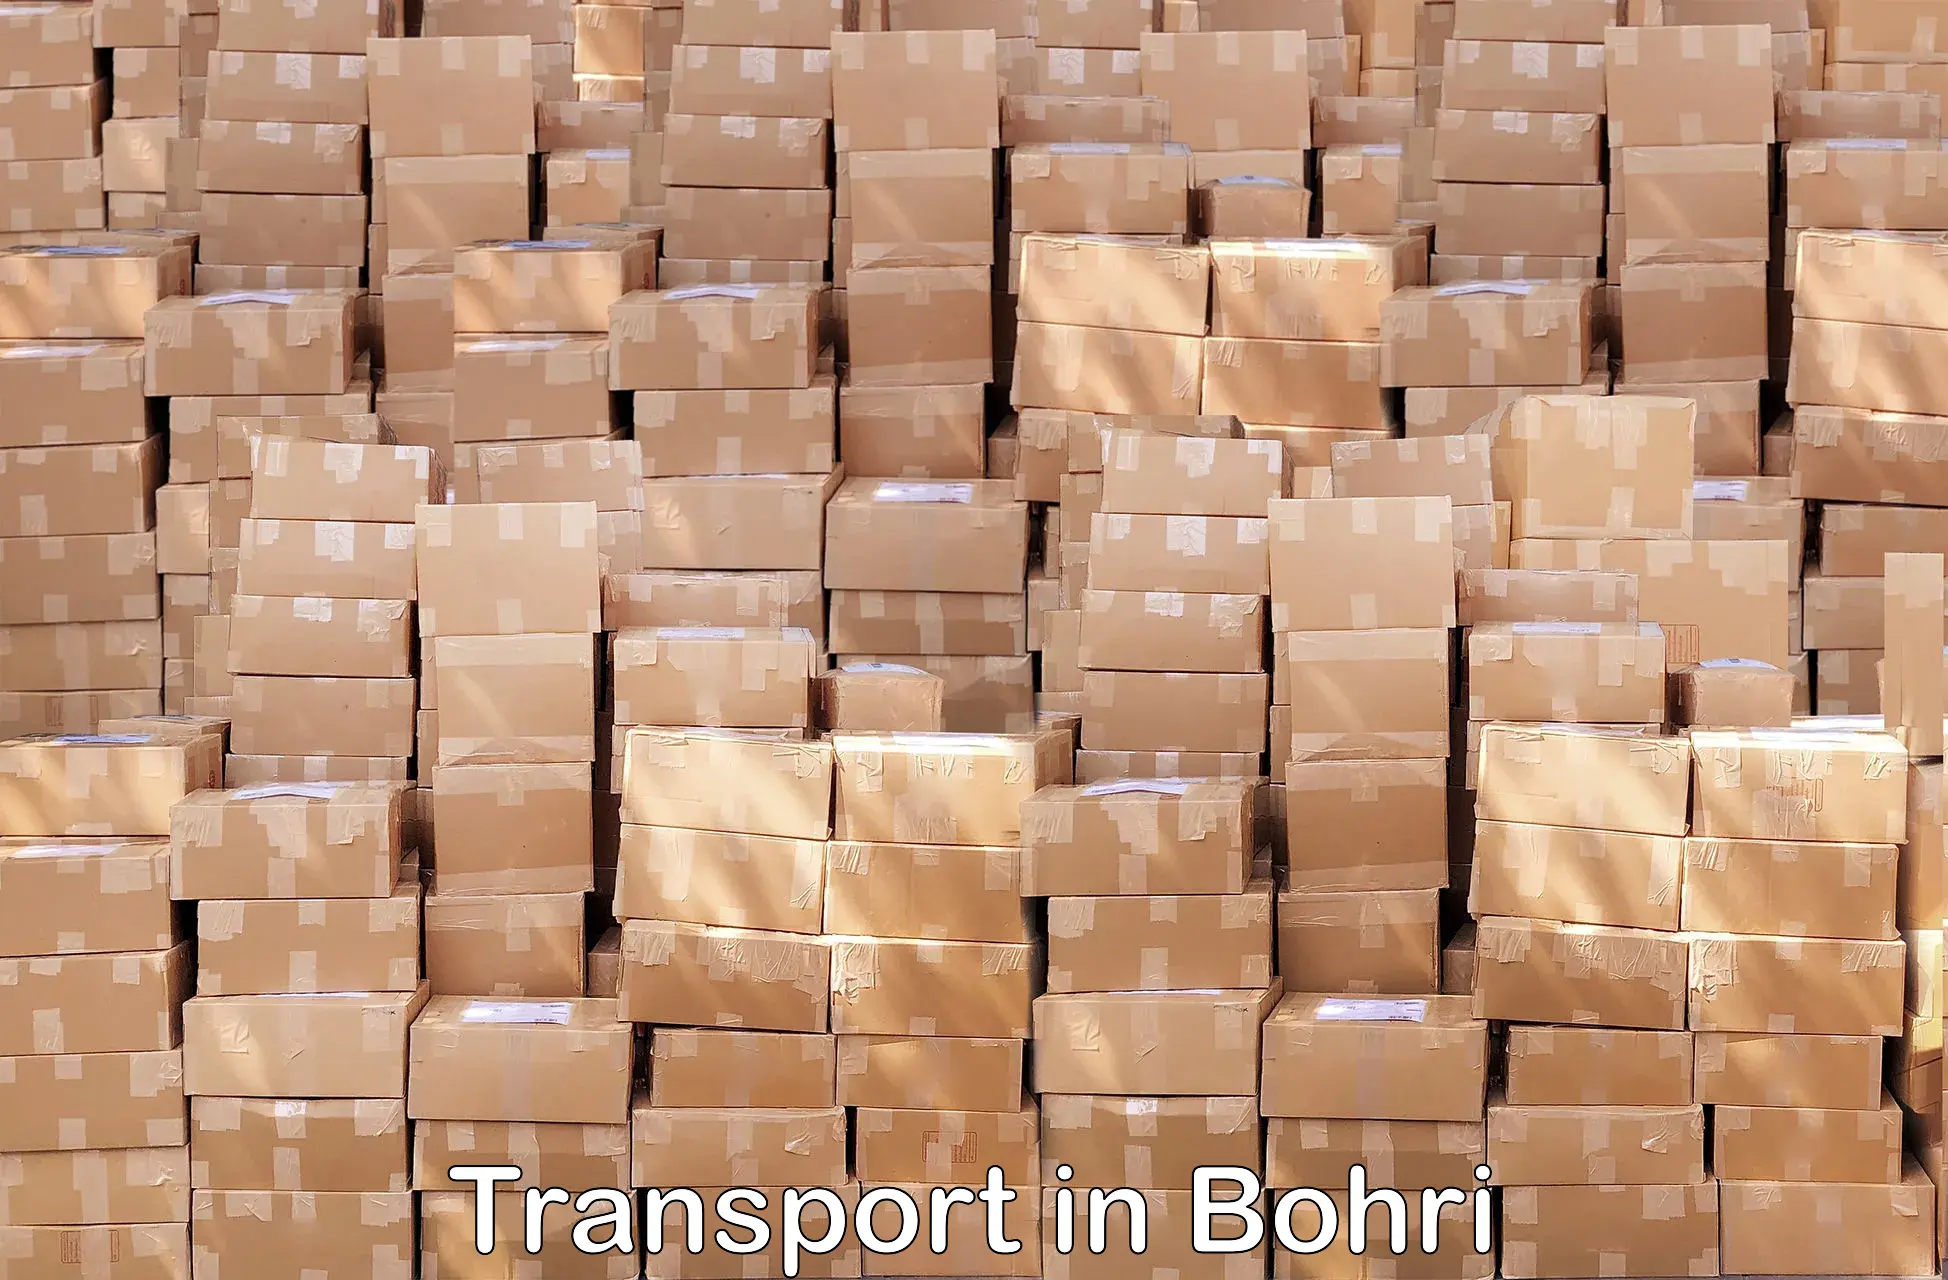 Intercity goods transport in Bohri